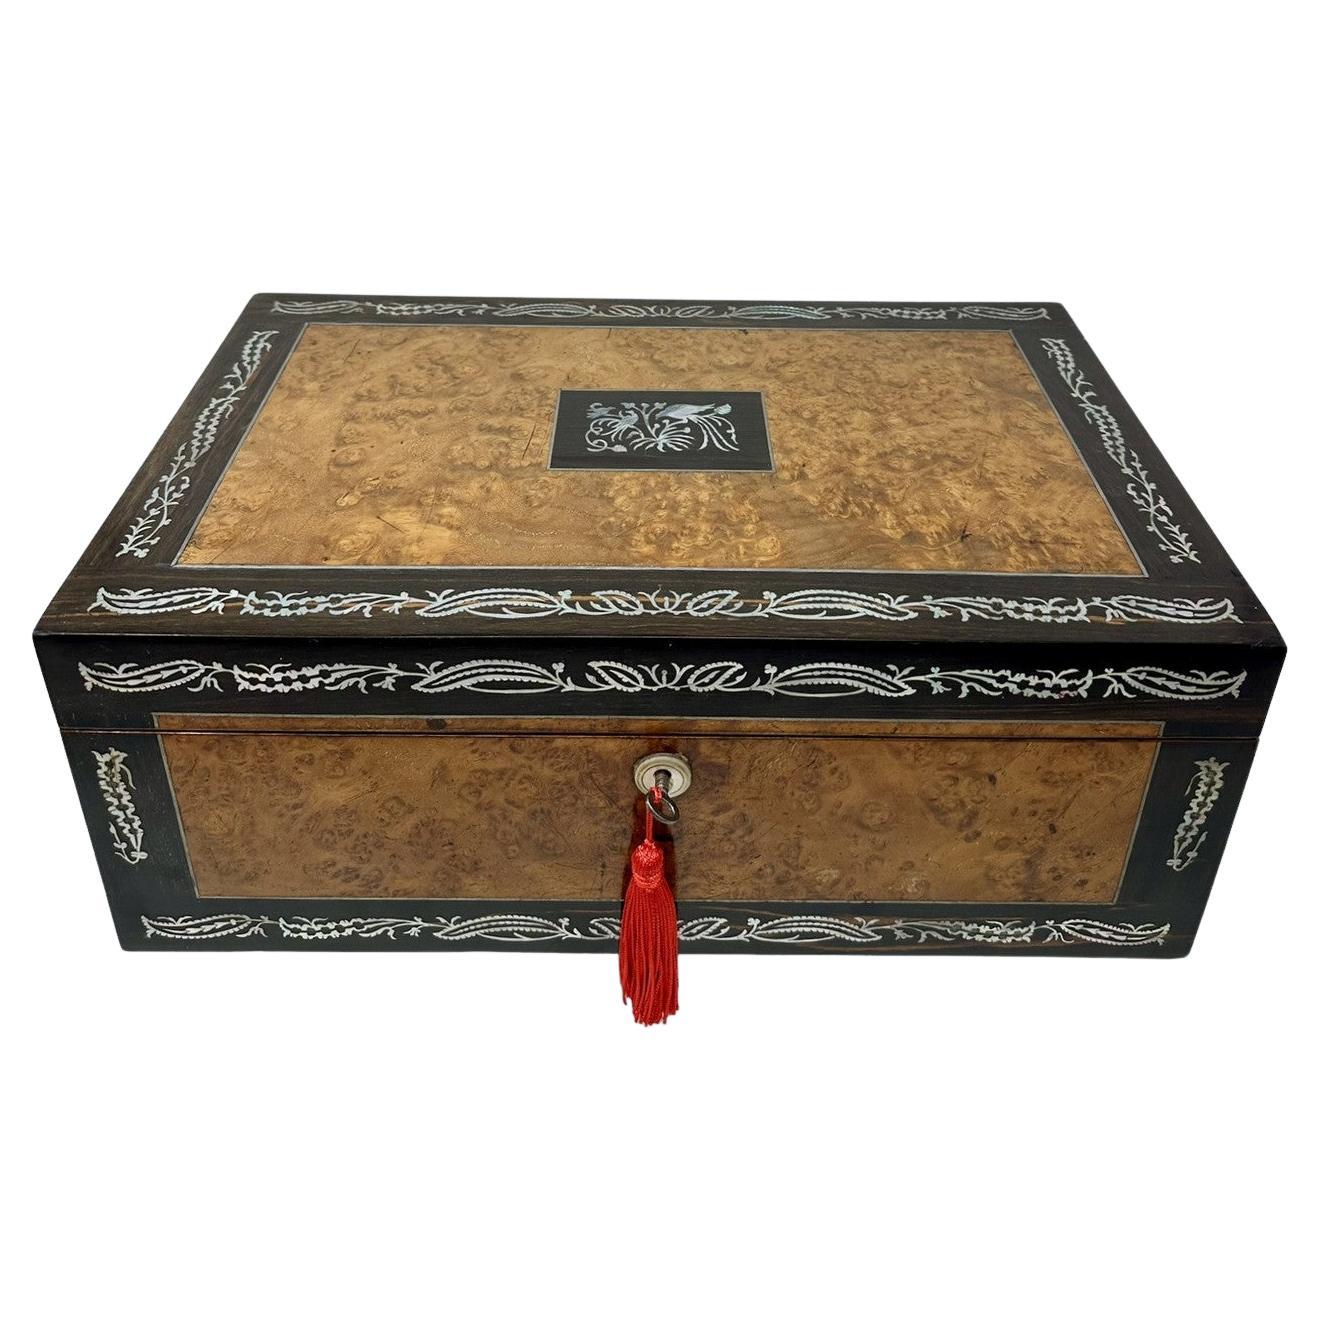 Antique Pewter Inlaid Burl Amboyne Coromandel Desk Wooden Writing Slope Box 19Ct